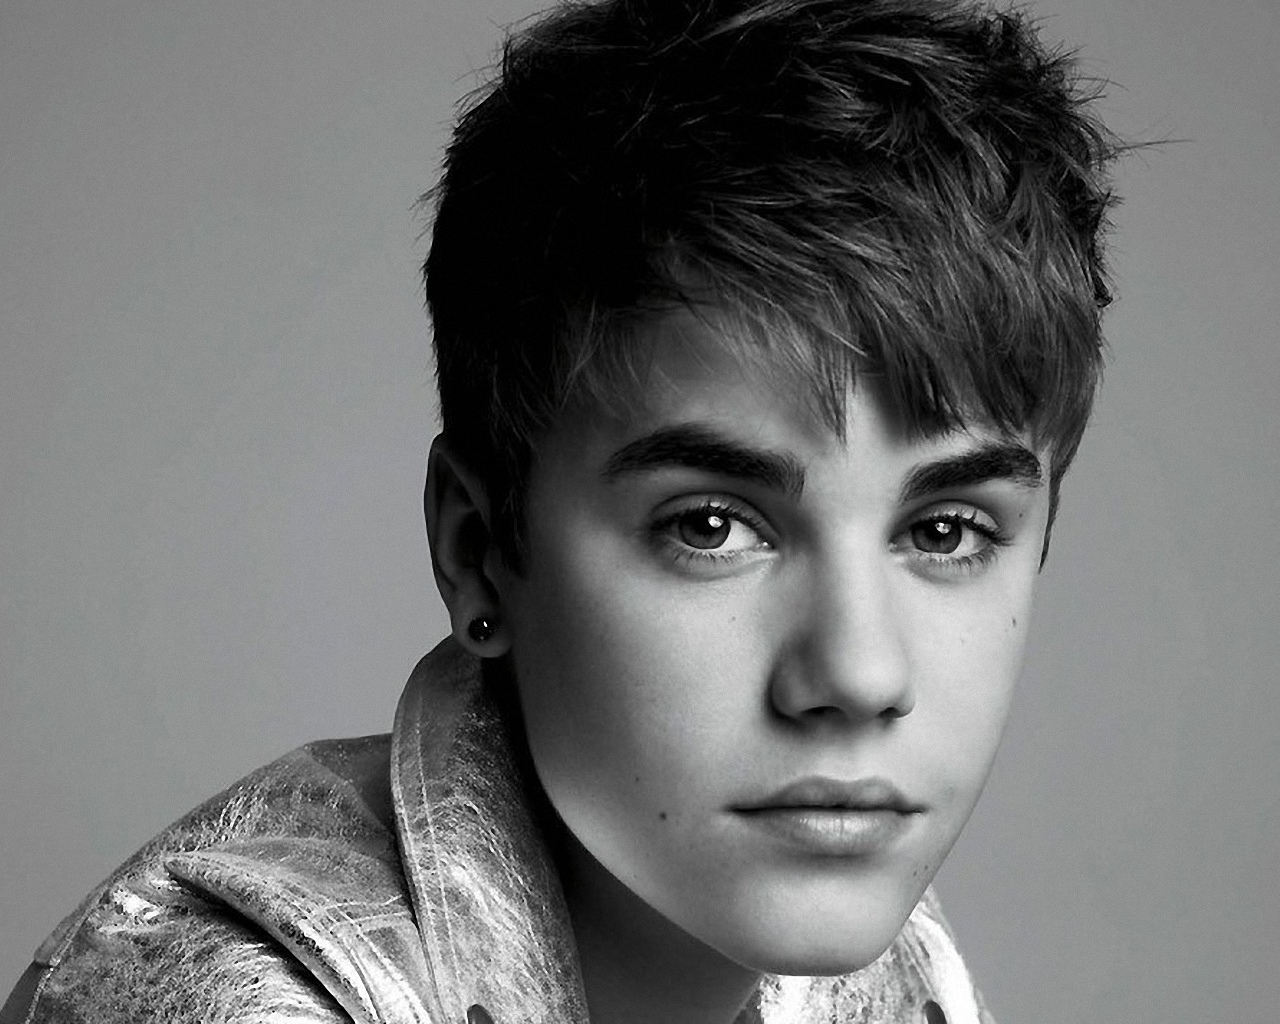 Justin Bieber Wallpaper Stock Photos